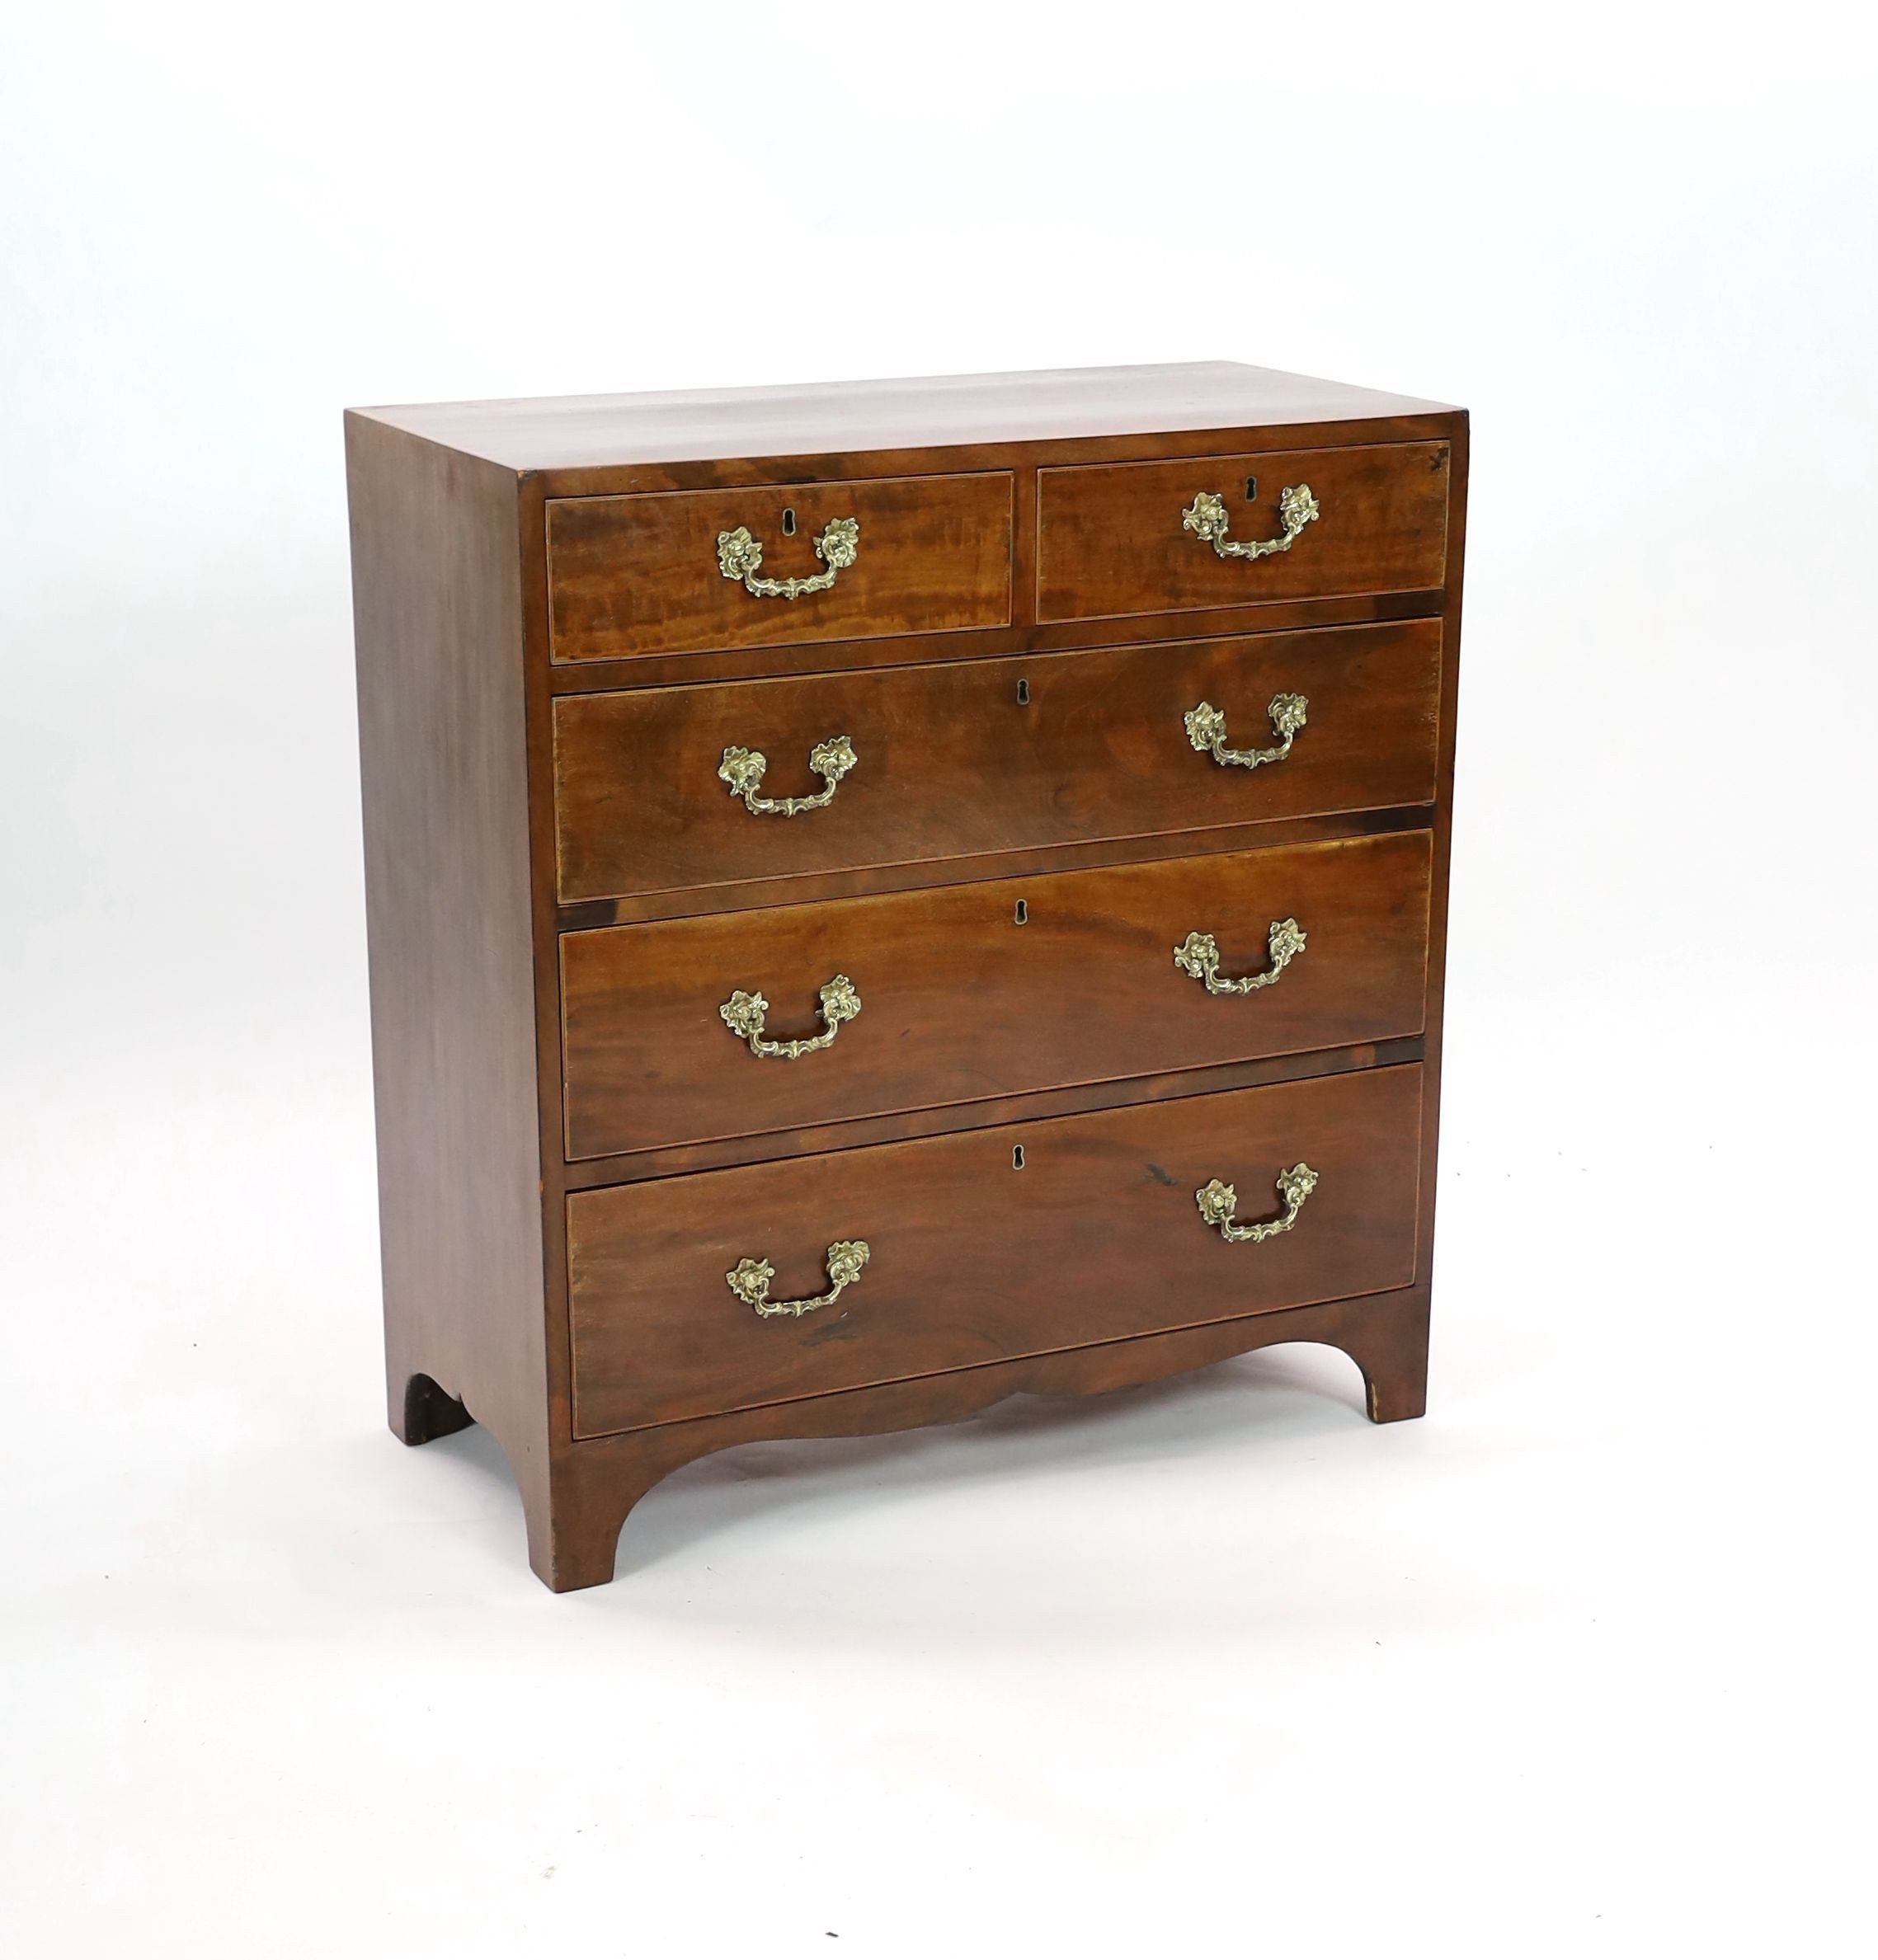 A George III inlaid mahogany chest, width 89cm depth 42cm height 95cm